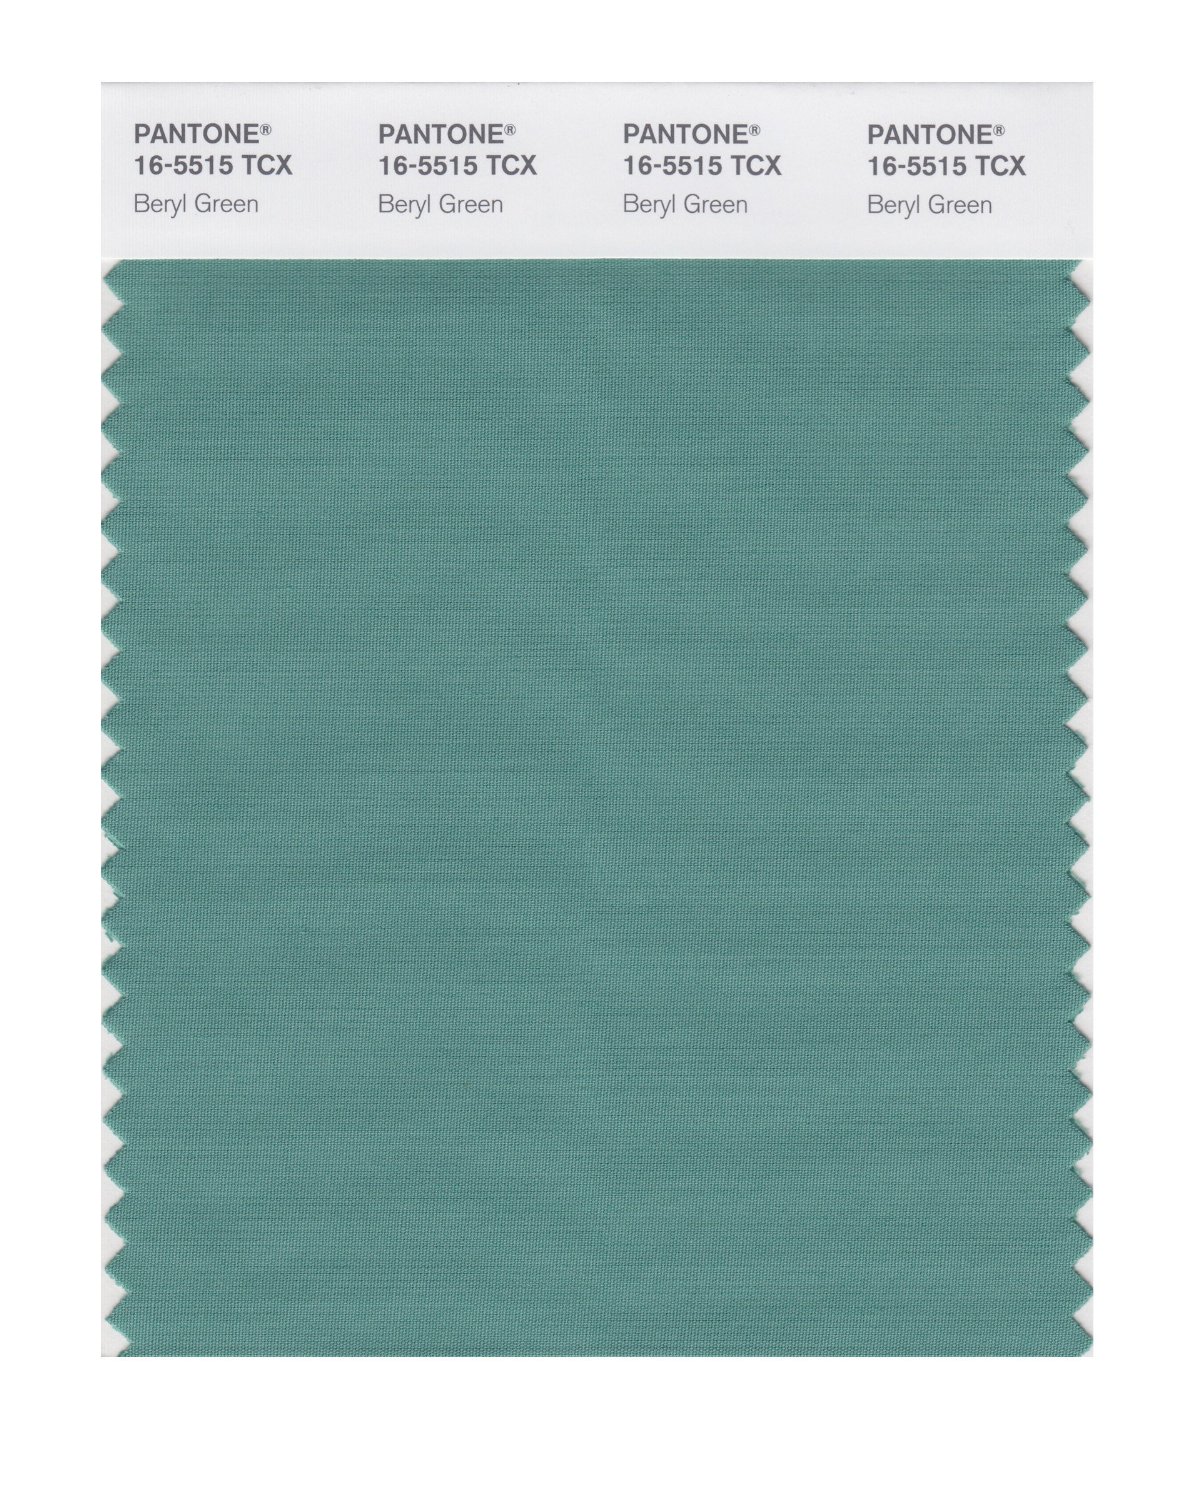 Pantone Cotton Swatch 16-5515 Beryl Green